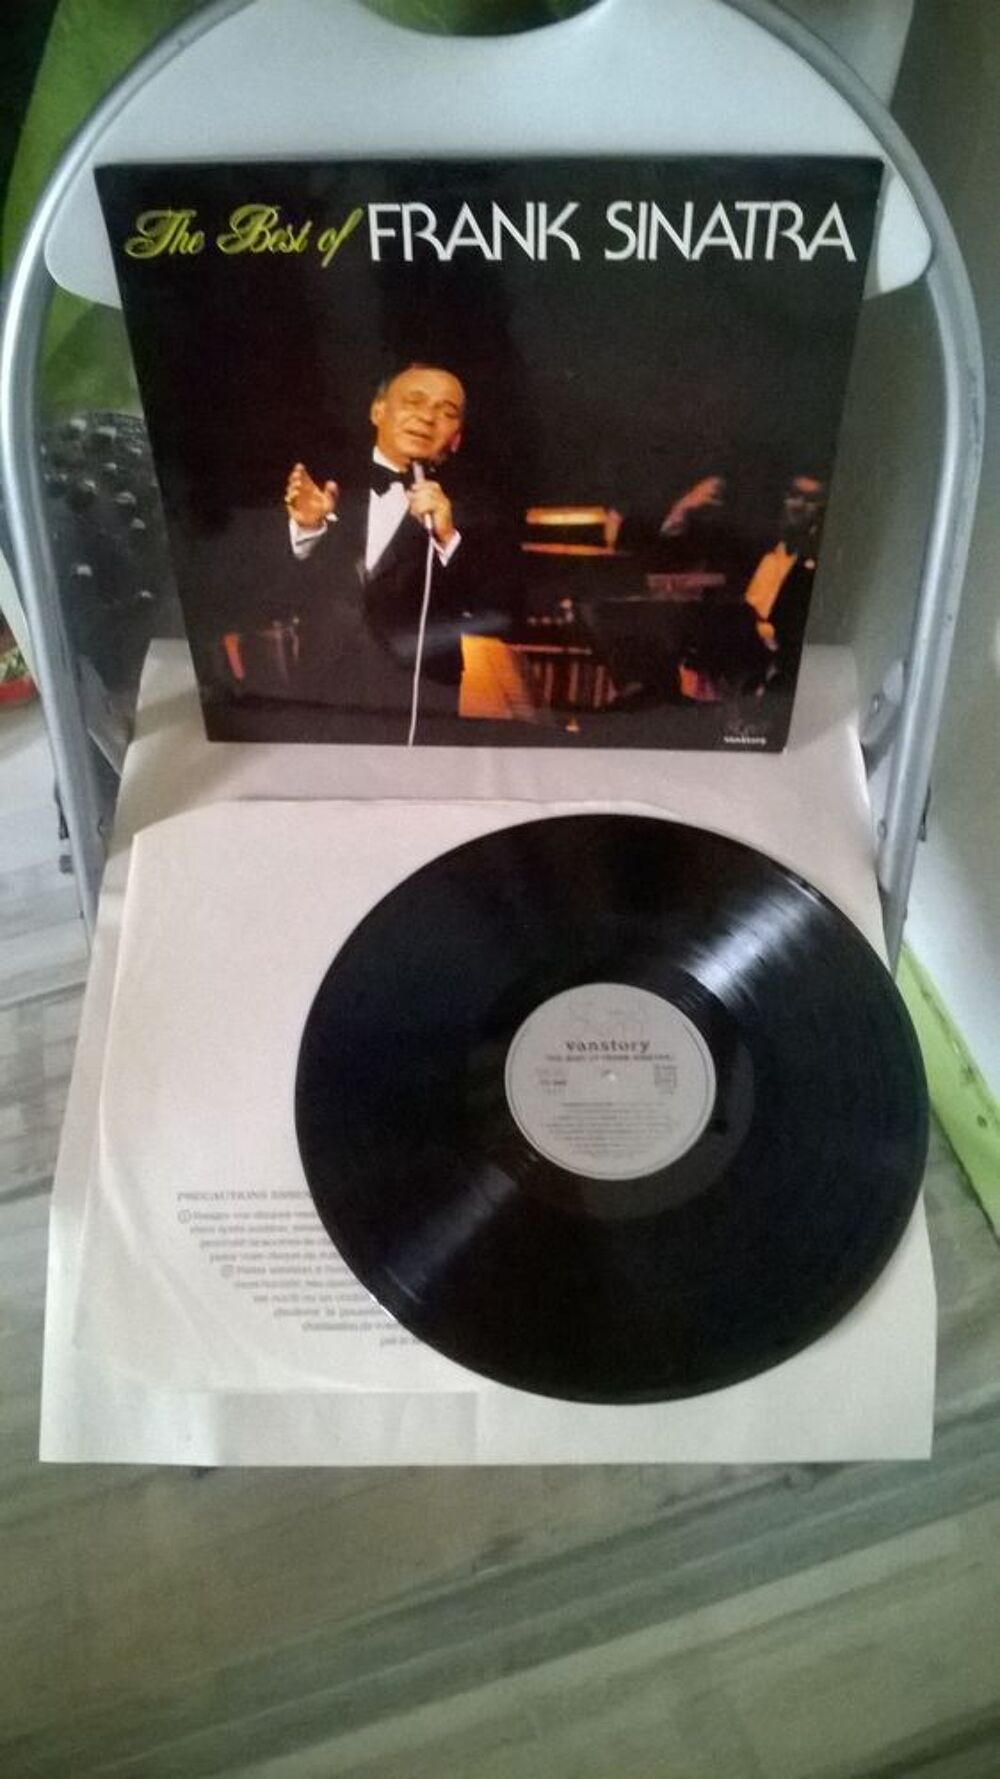 Vinyle FRANK SINATRA
THE BEST OF
1981
Excellent etat
Lov CD et vinyles